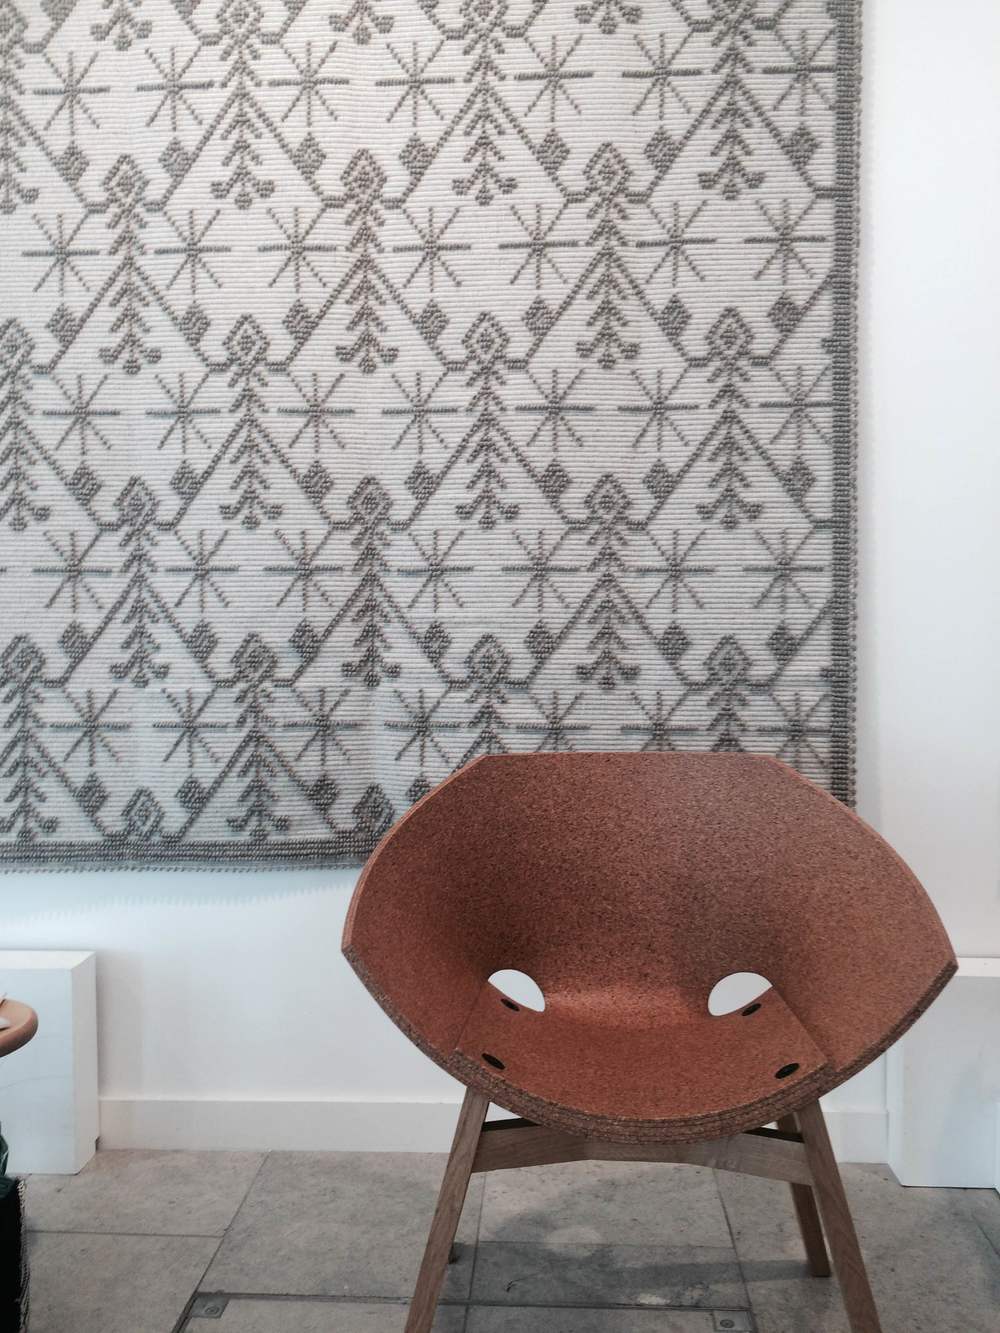 Prato and Corkigami chair by Carlos Ortega Design.JPG